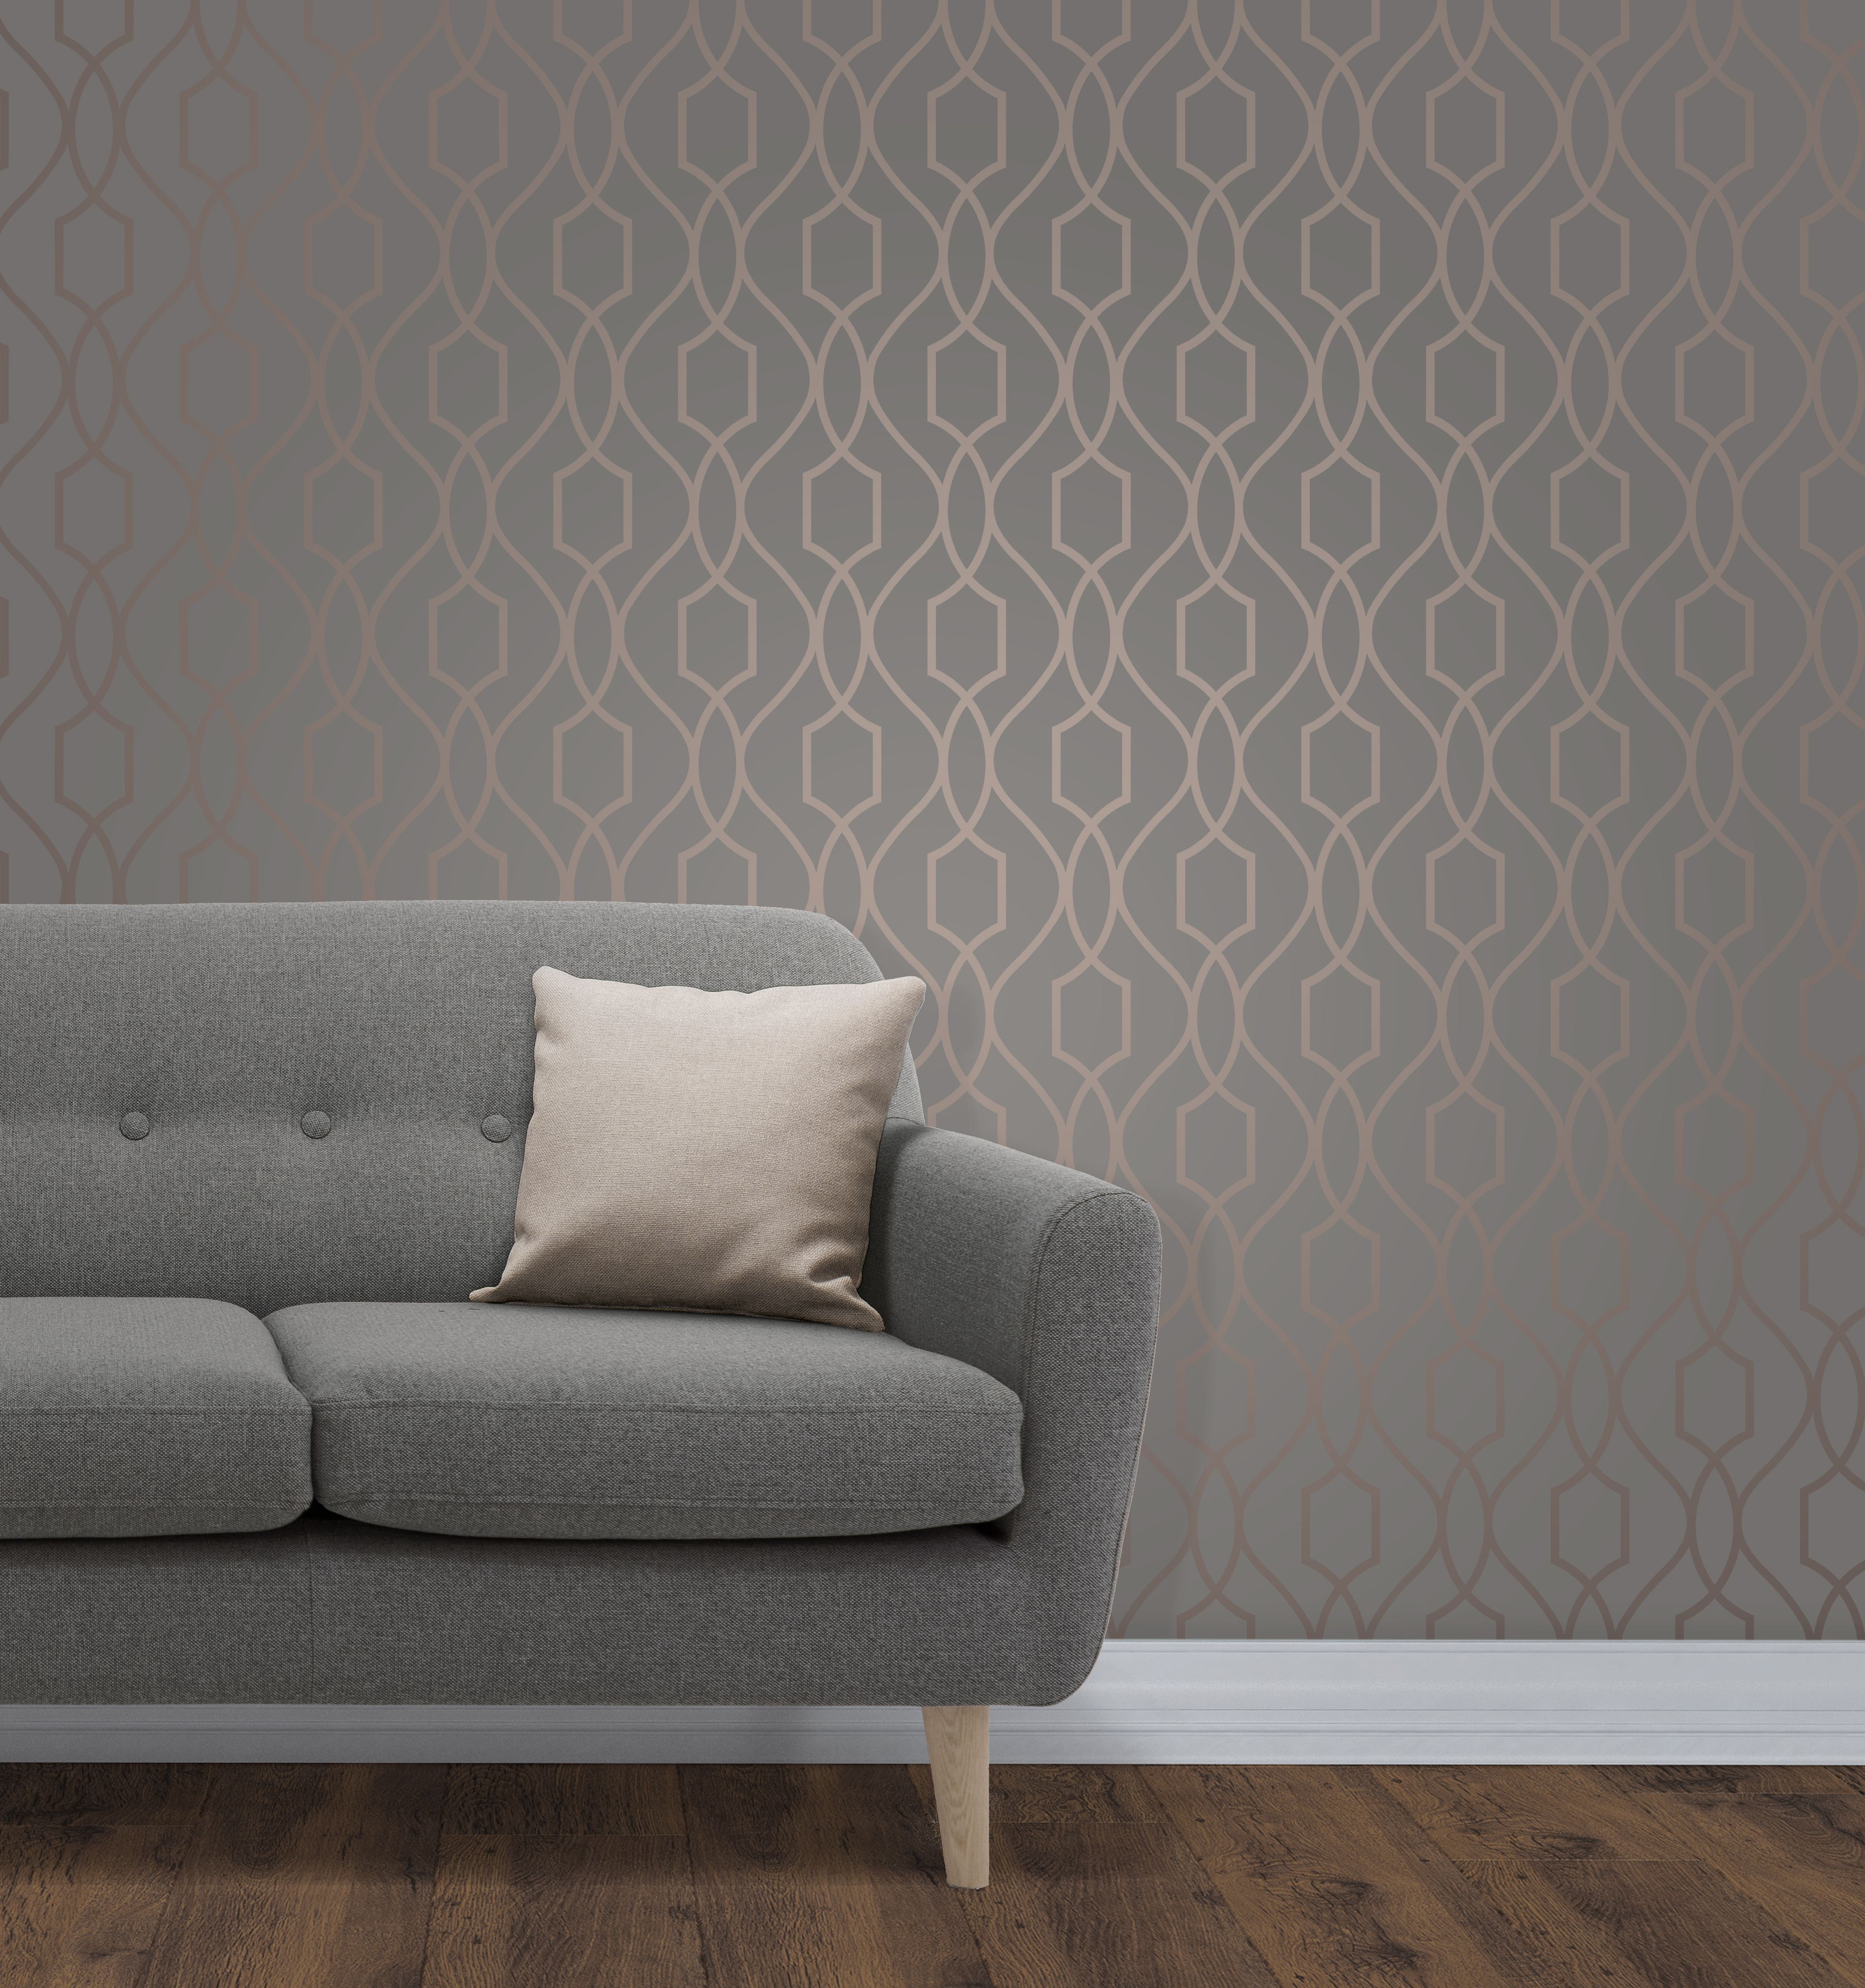 Fine Décor Apex Charcoal Geometric Metallic effect Smooth Wallpaper Sample